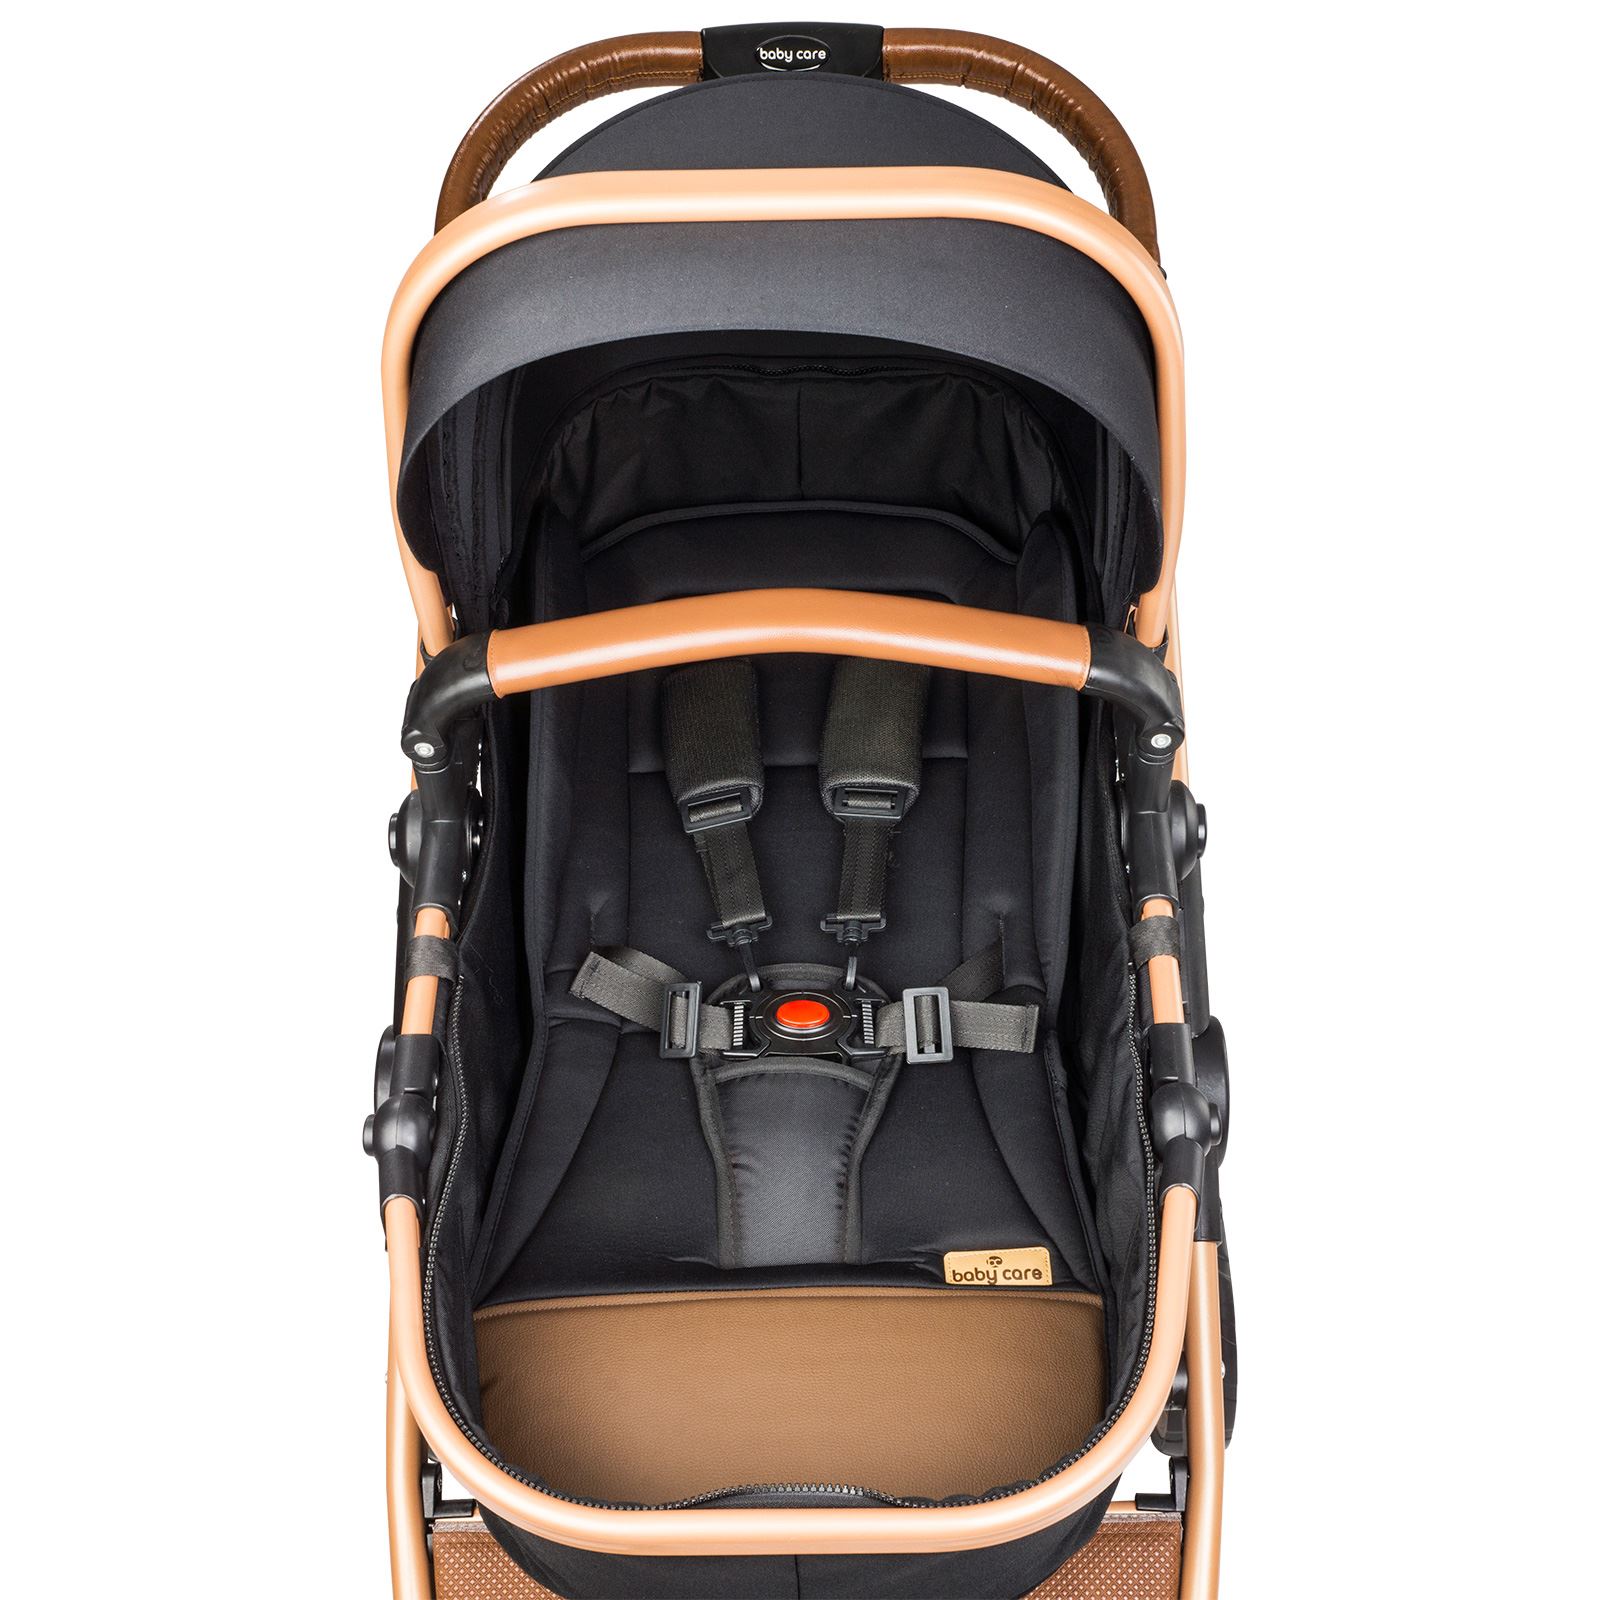 BC351 BabyCare Titan Basic Travel Sistem Bebek Arabası Kahverengi